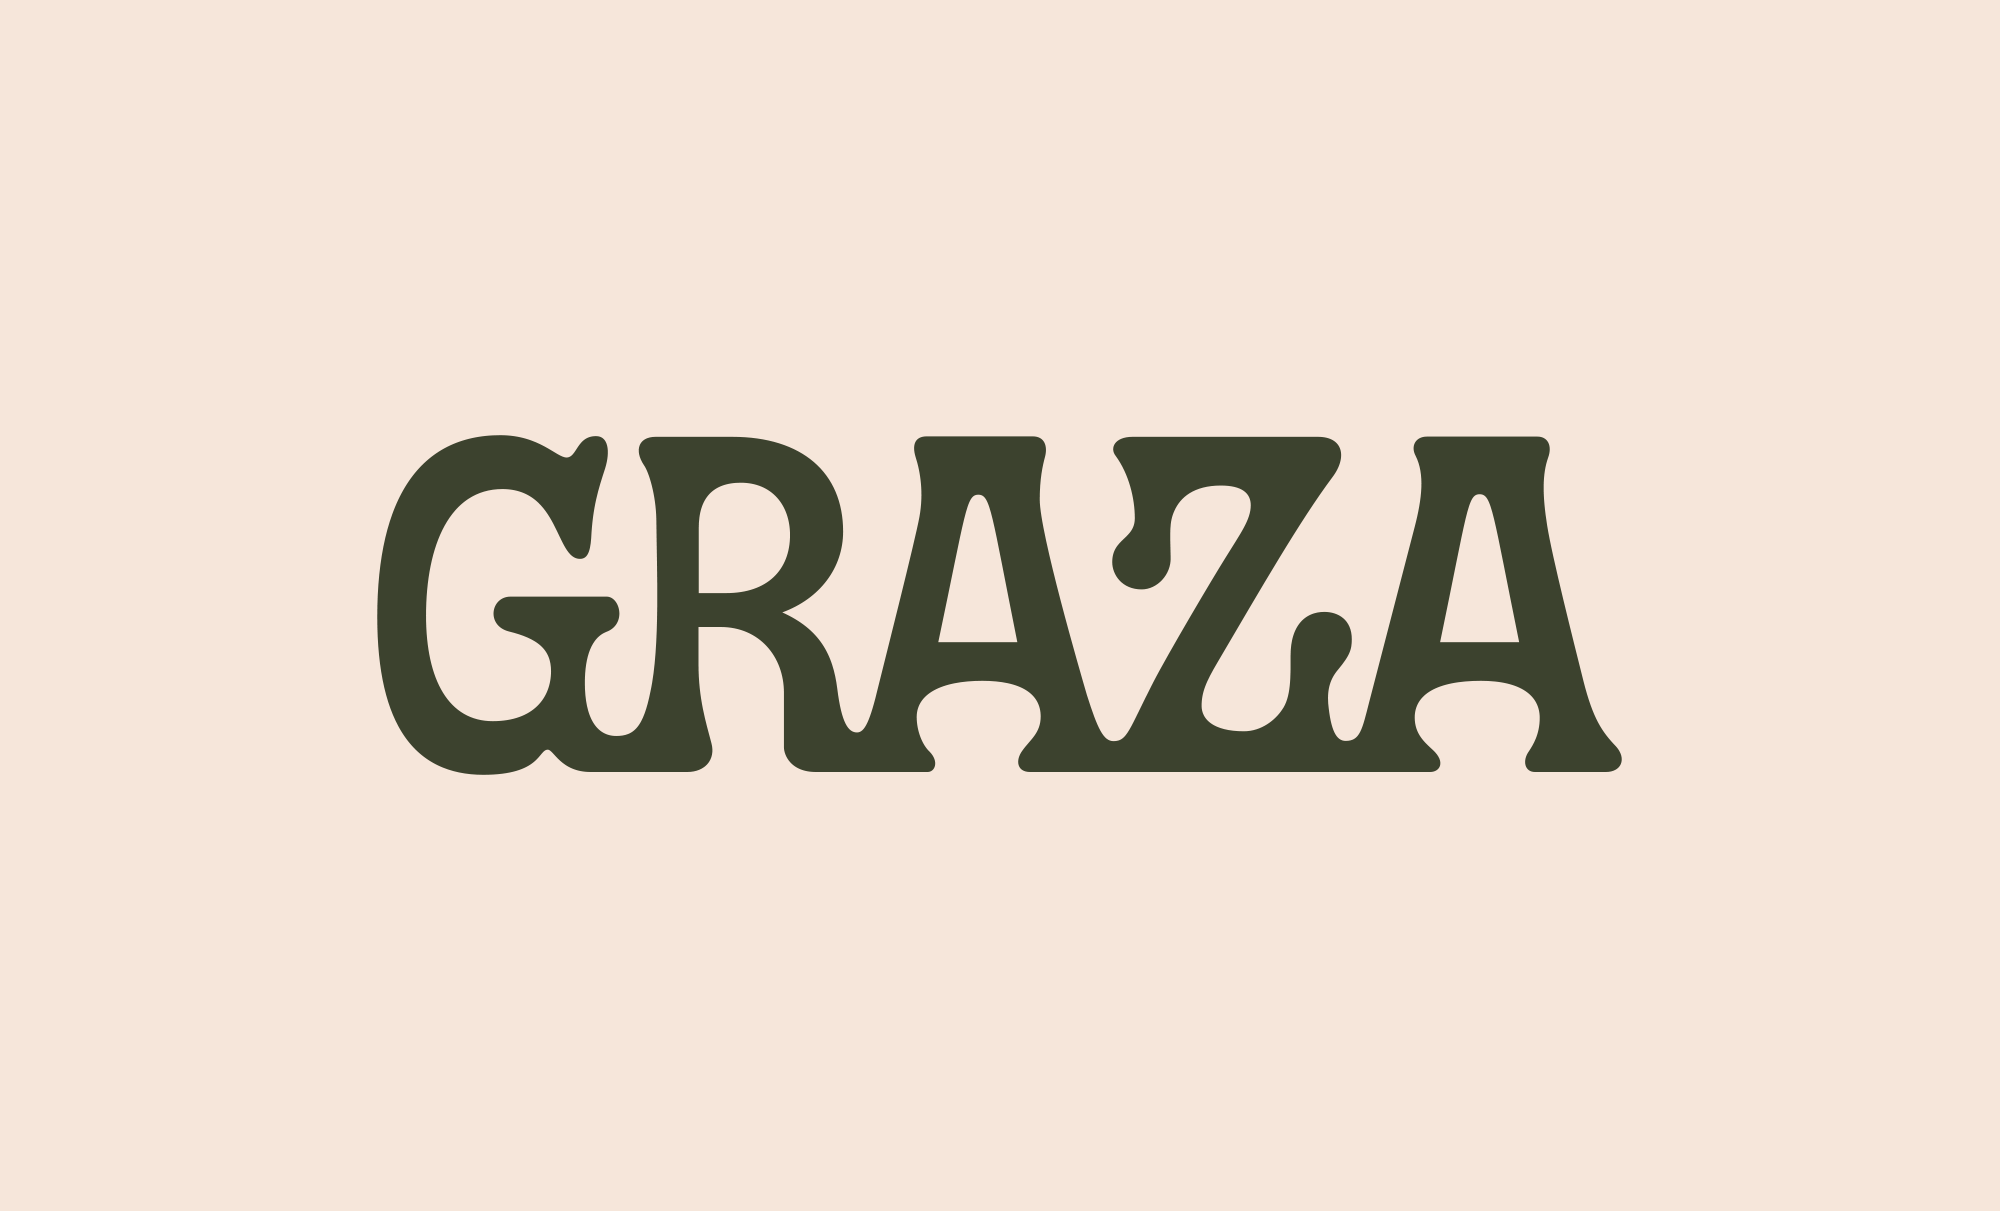 Logotype design by Gander for squeezable single origin olive oil Graza